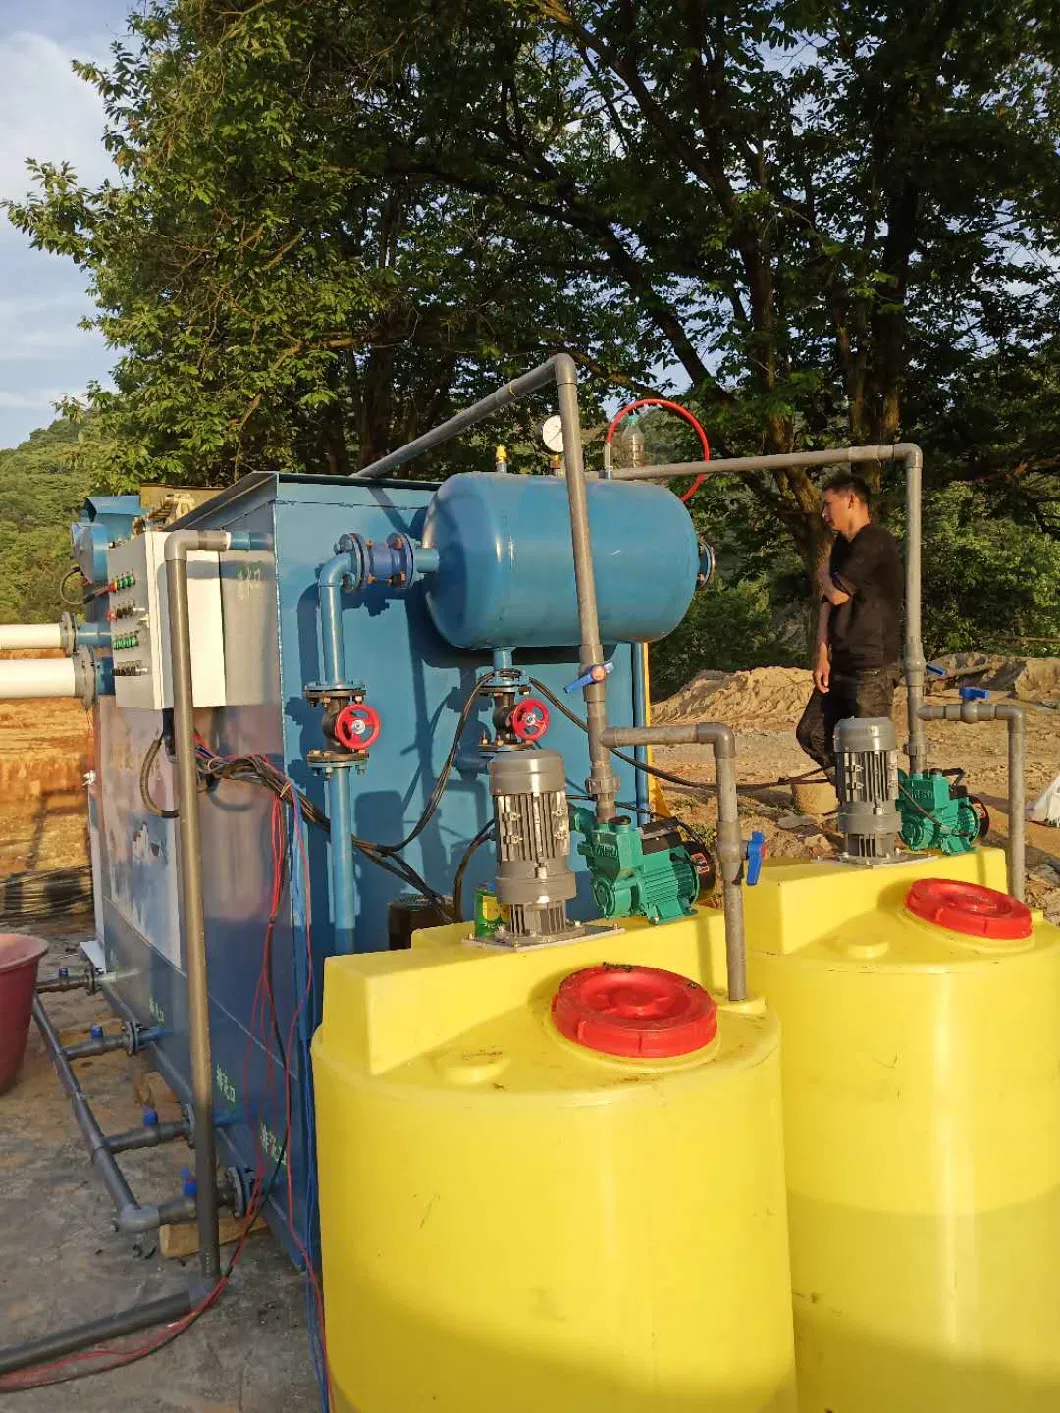 Dissolved Air Flotation Machine Acid Washing/ Phosphating Wastewater Treatment Equipment/ Daf Large